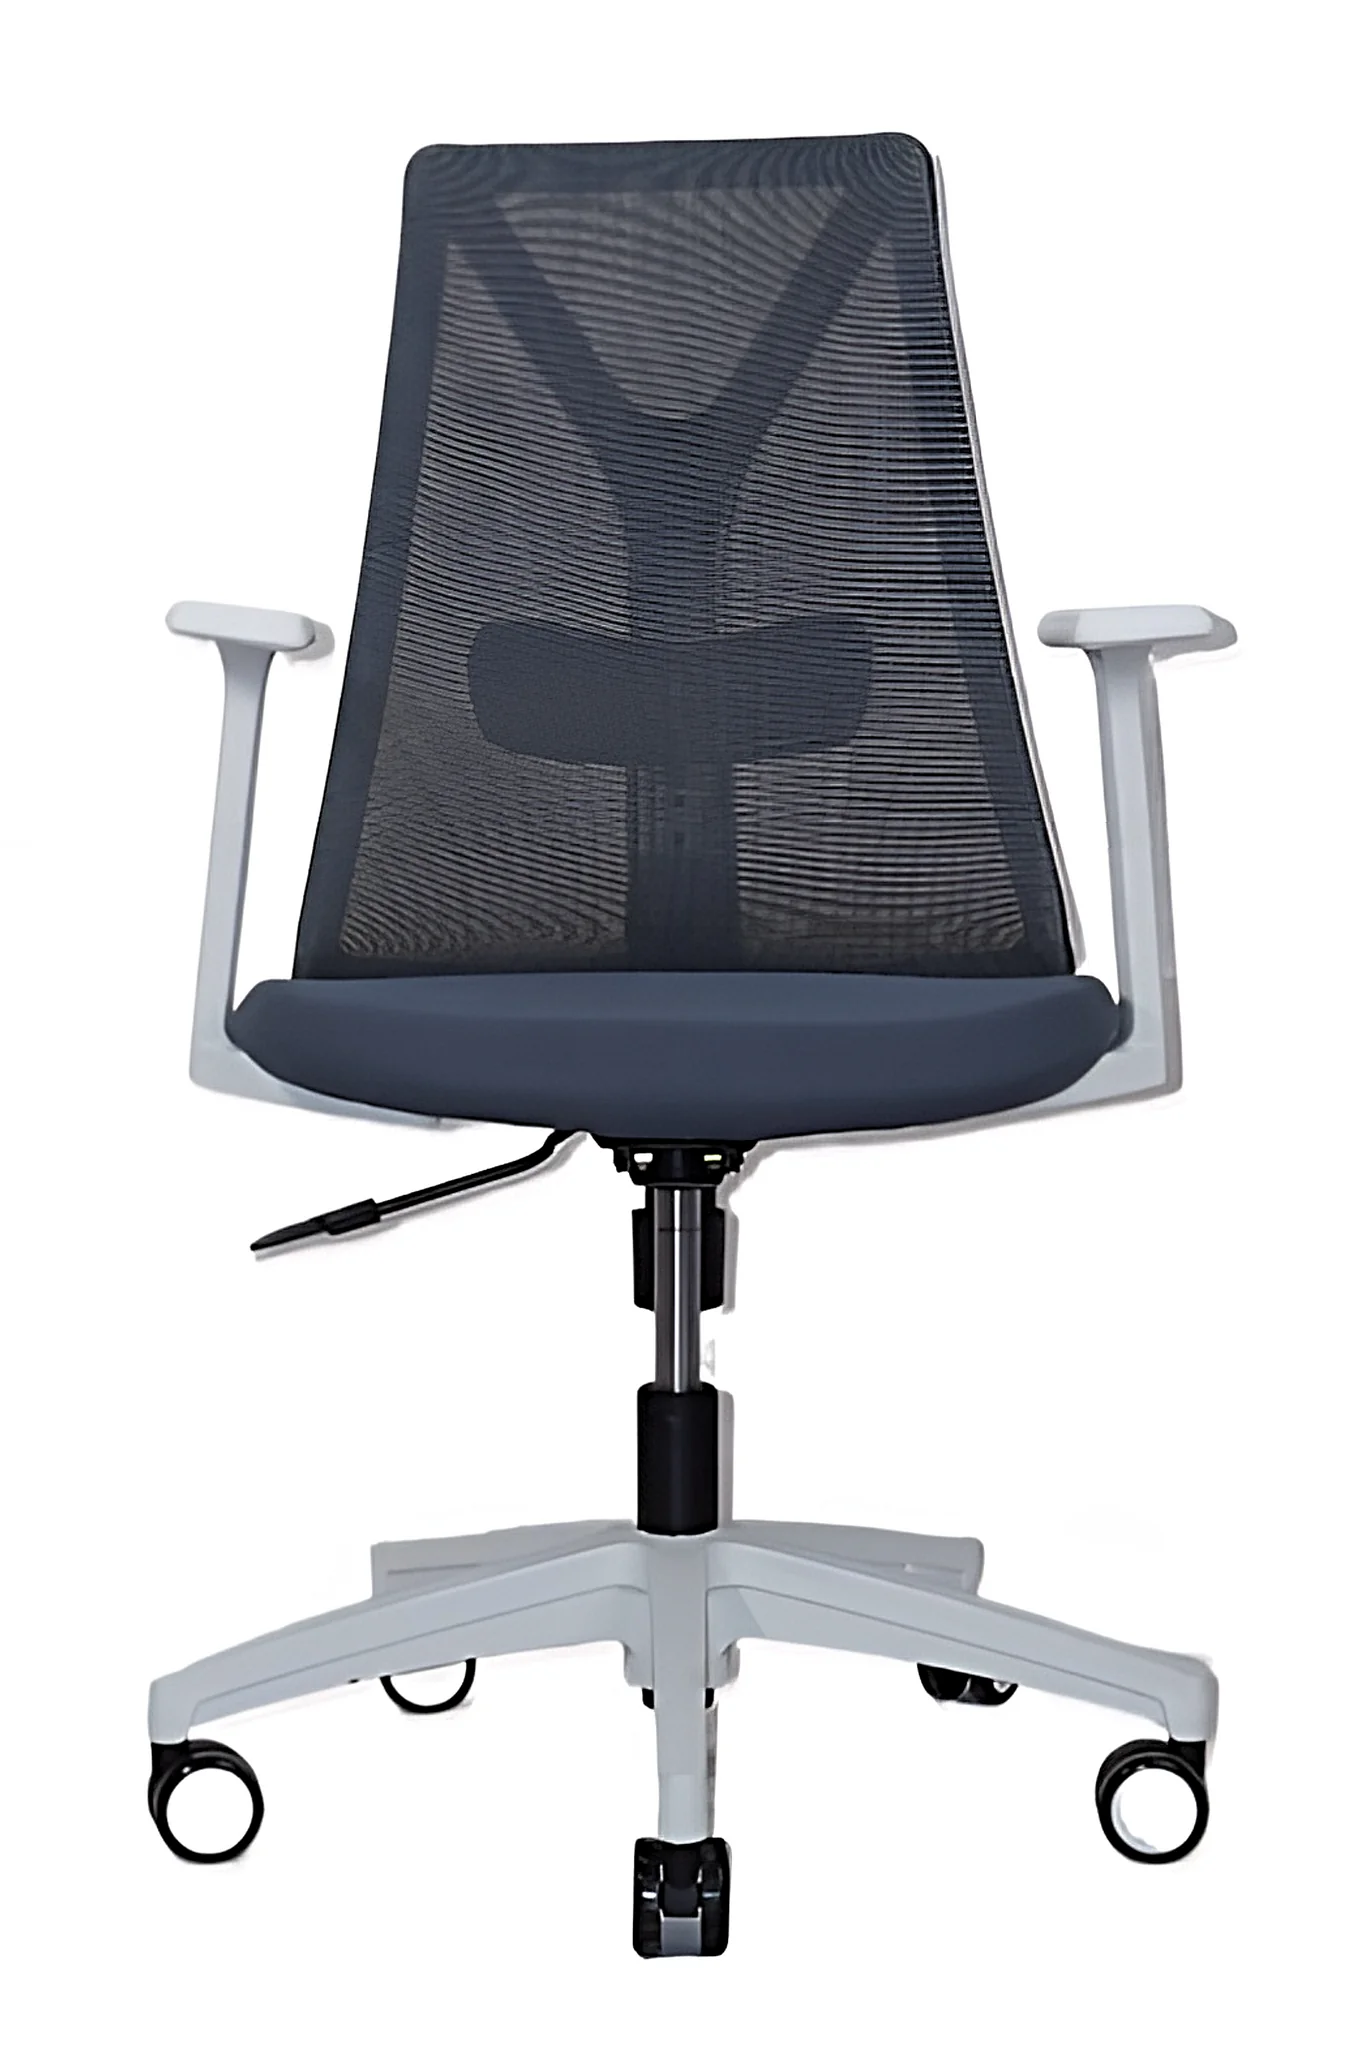 Asthetic yan blue office chair